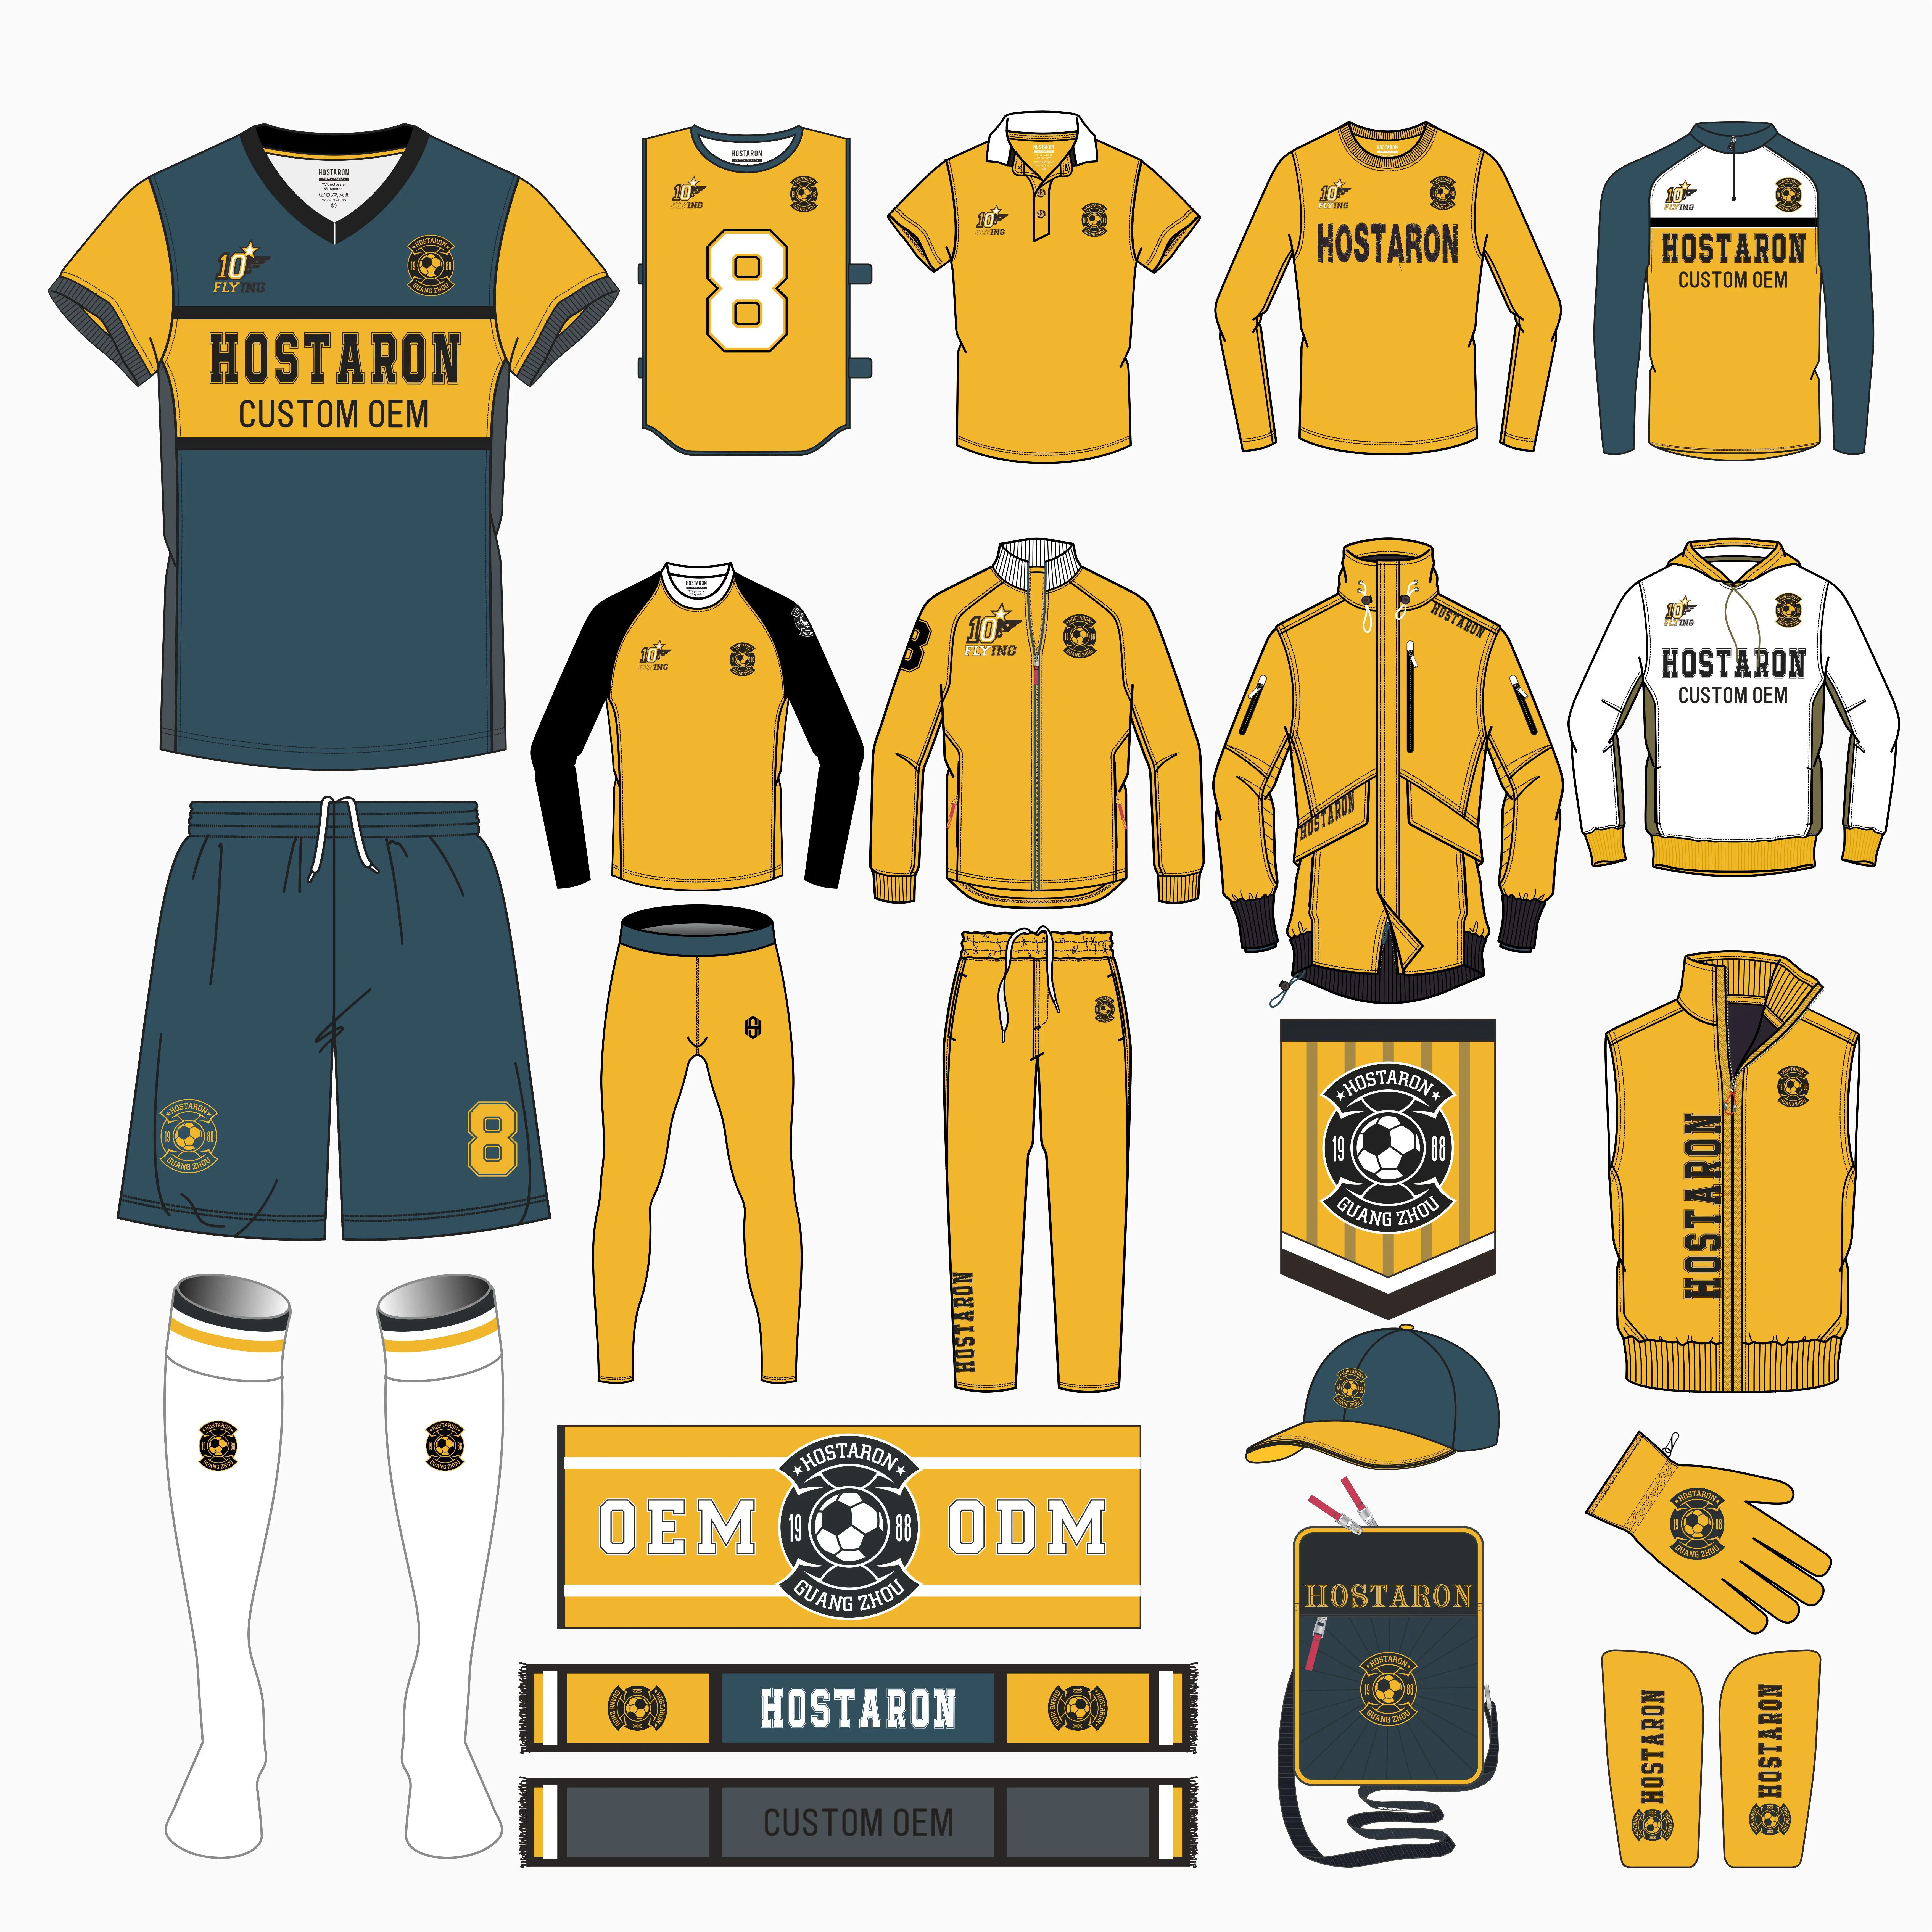 HOSTARON Custom Wholesale High Quality Quick Dry Soccer Uniform Set Men'S Full Size Football Sports Wears Soccer Jersey Full Set